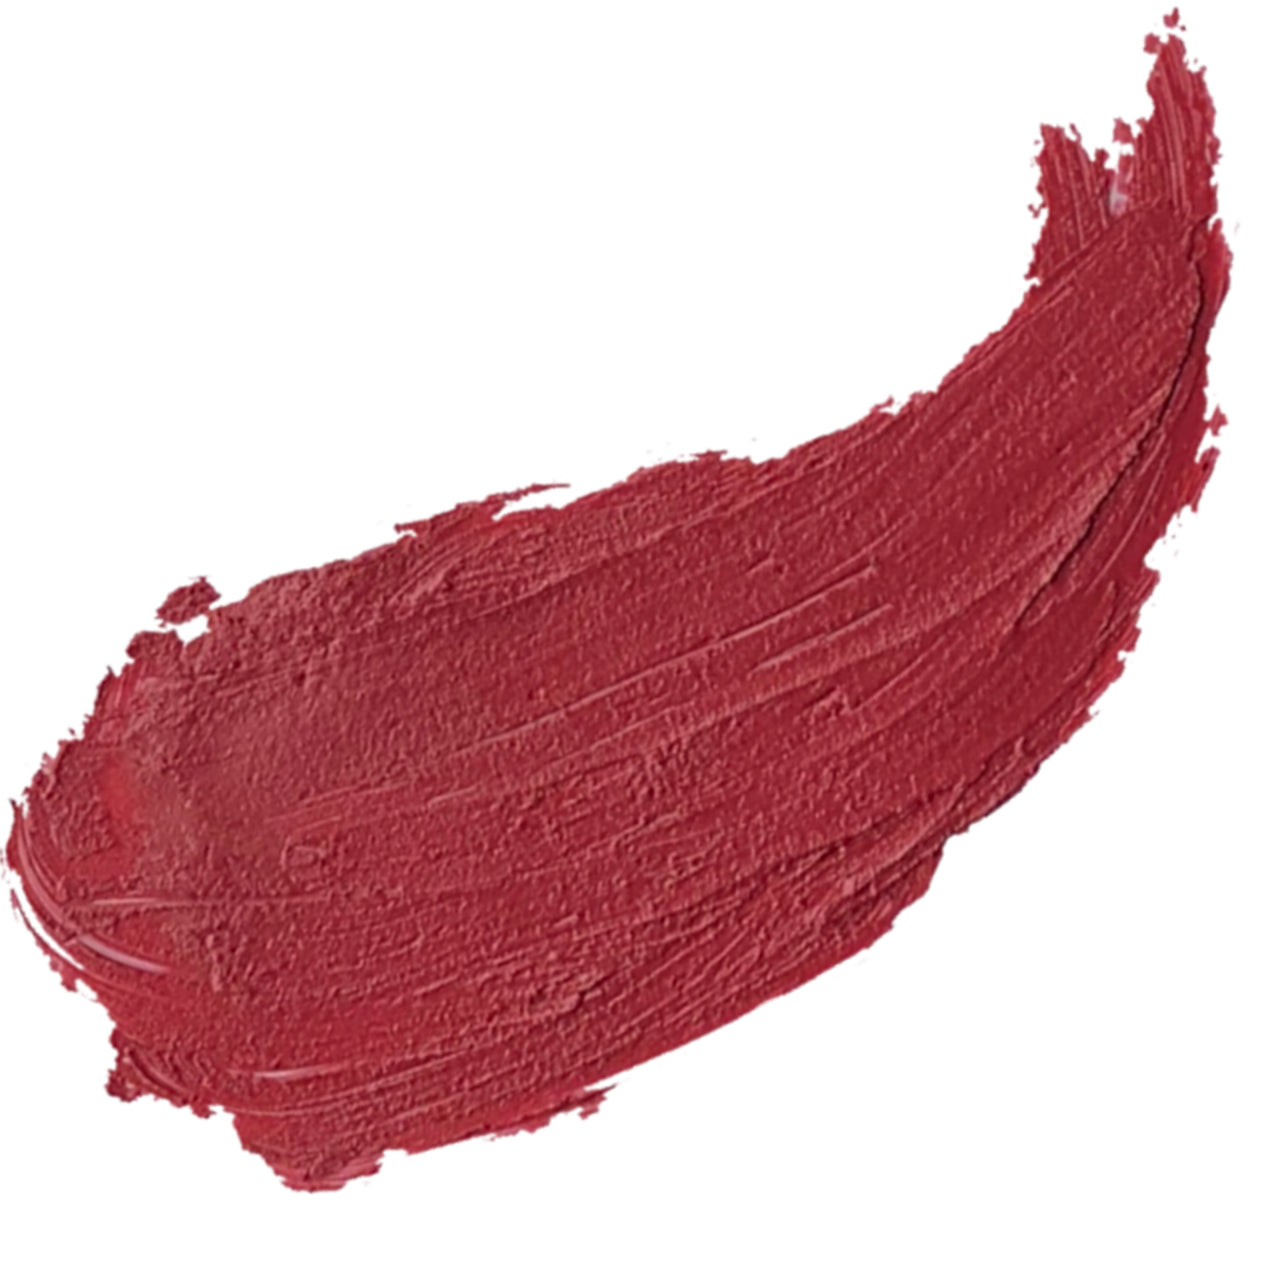 Berry Kissable - Vibrant Berry Pink Red Orange Long Lasting Organic Lipstick